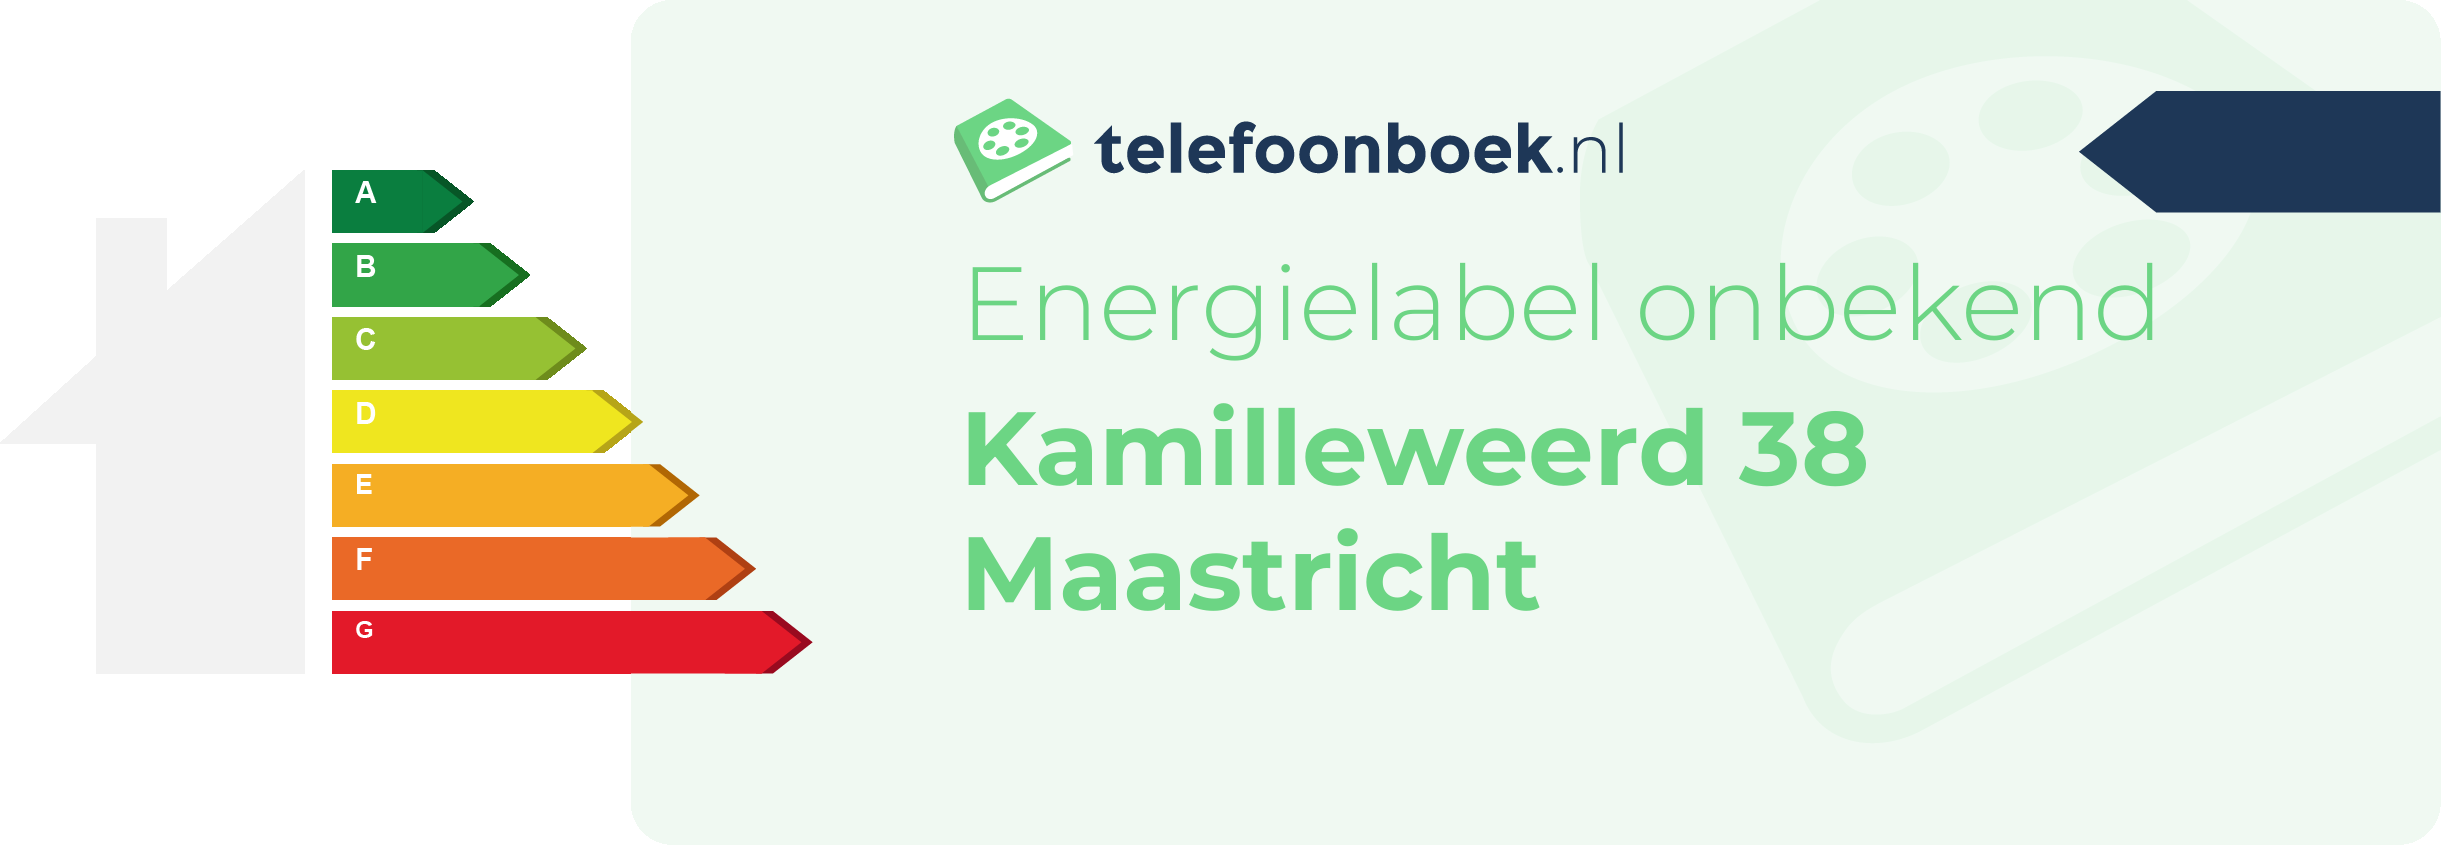 Energielabel Kamilleweerd 38 Maastricht